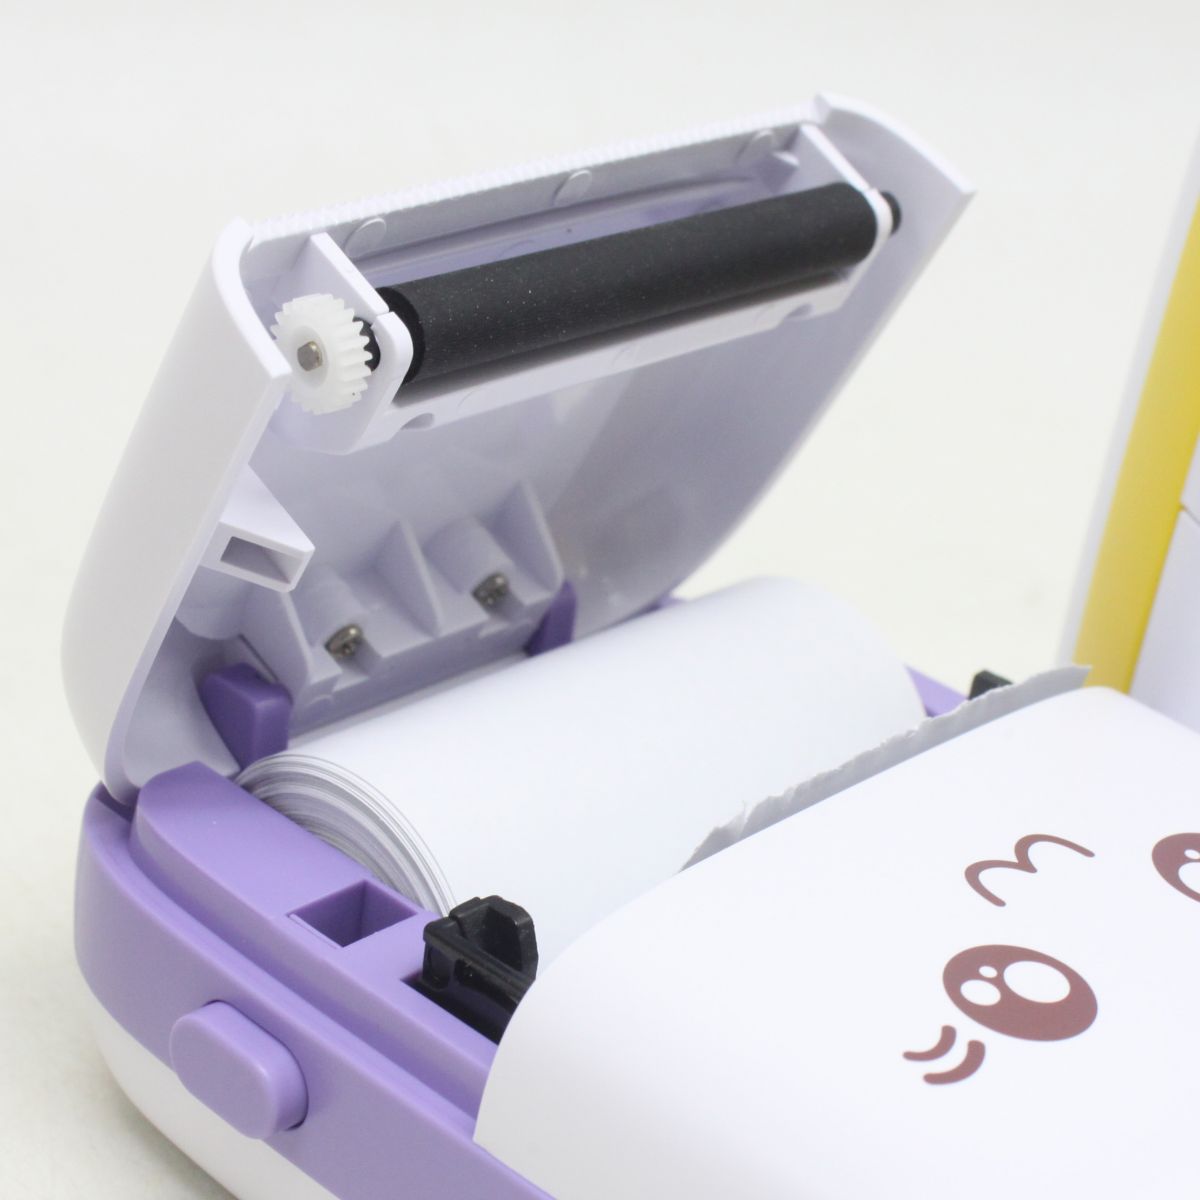 Портативный термопринтер "Mini Printer" (желтый)